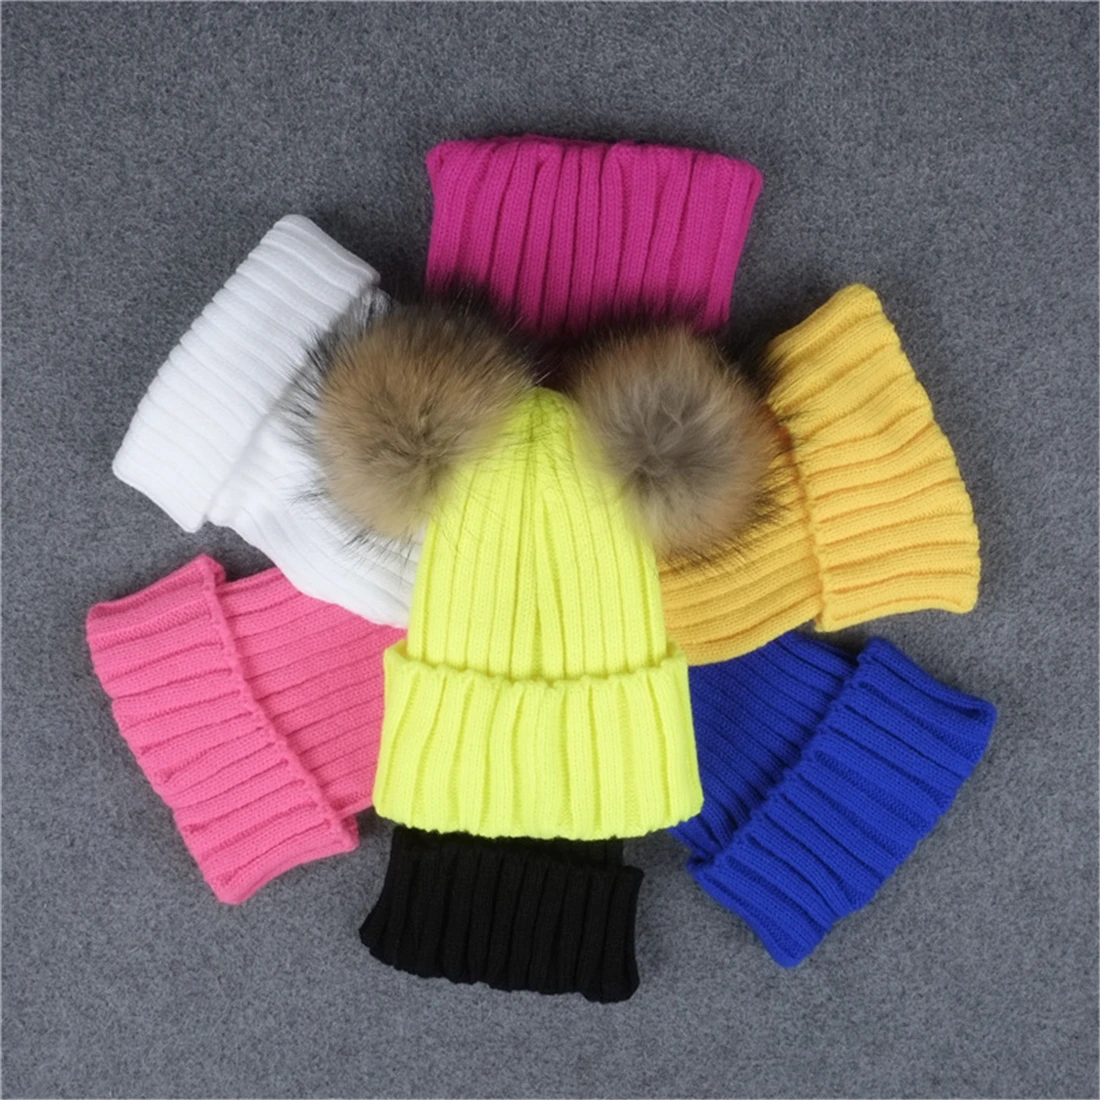 Crochet Women's Winter Hats Fashion Warm Braided Wool Berets Beanie Boys Girls Cute Fur Caps 2017 Knitting Pink Black Earwarmer